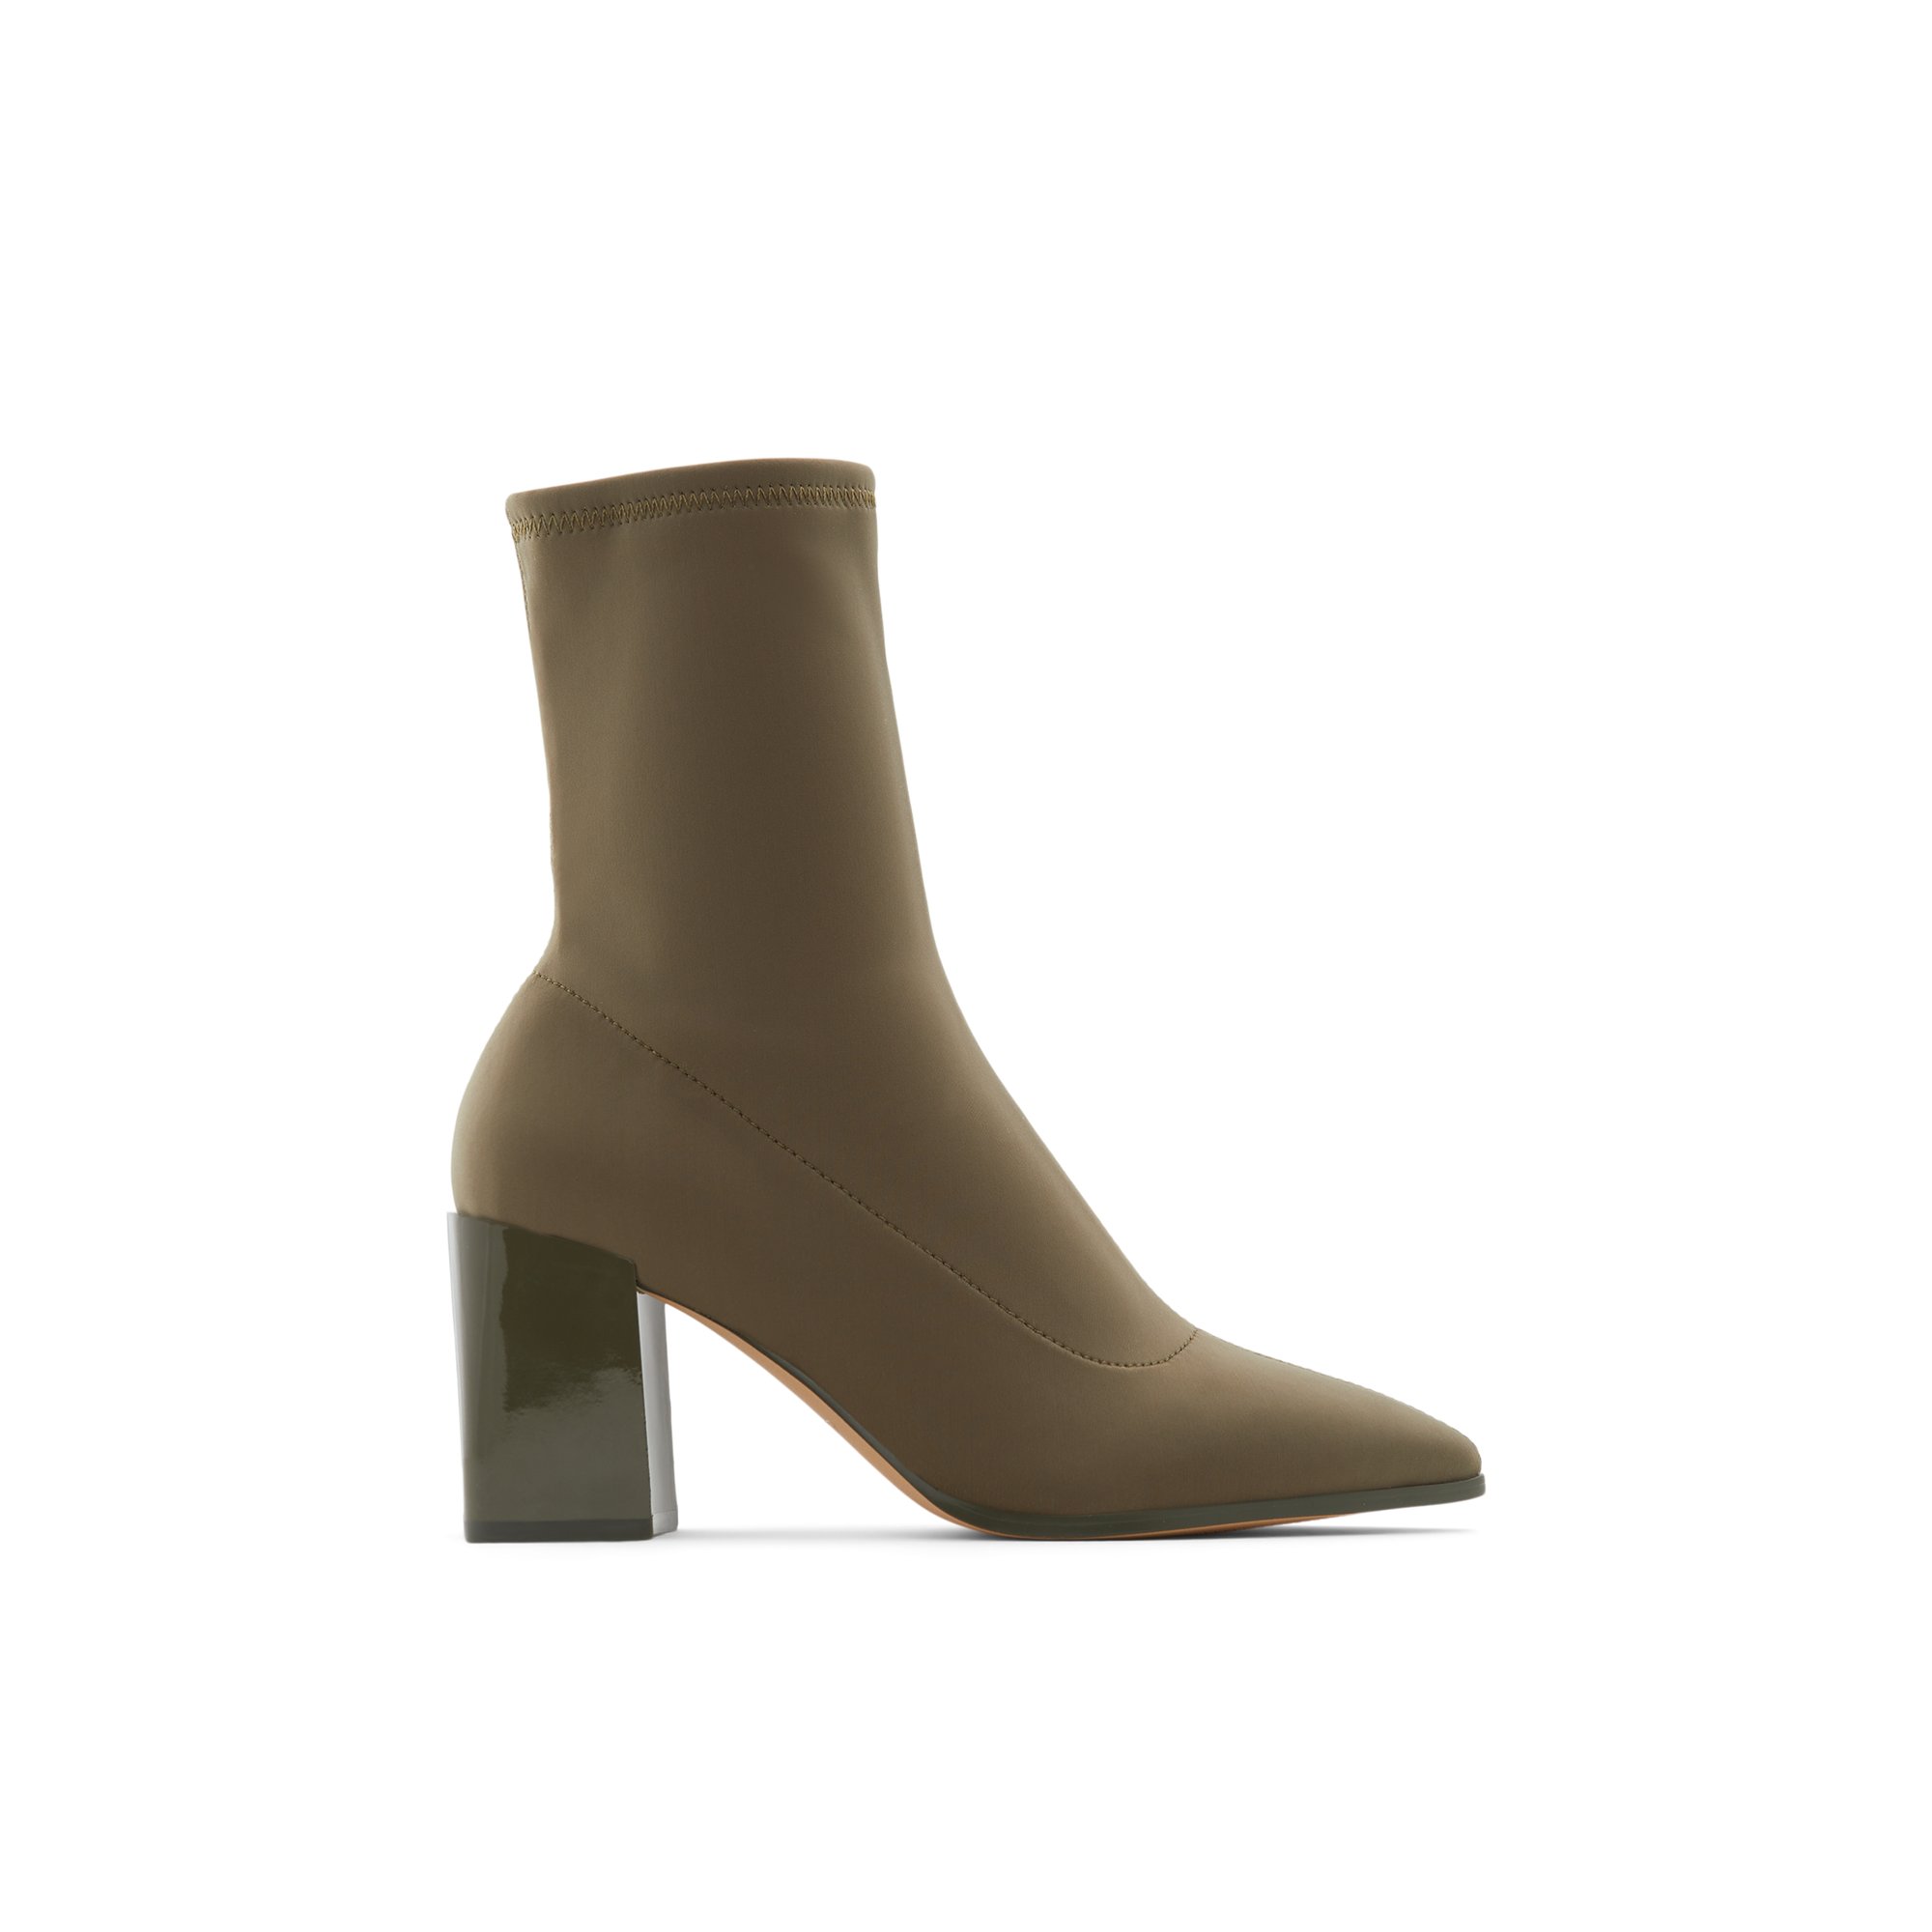 Image of ALDO Adwigocia - Women's Ankle Boot - Beige, Size 7